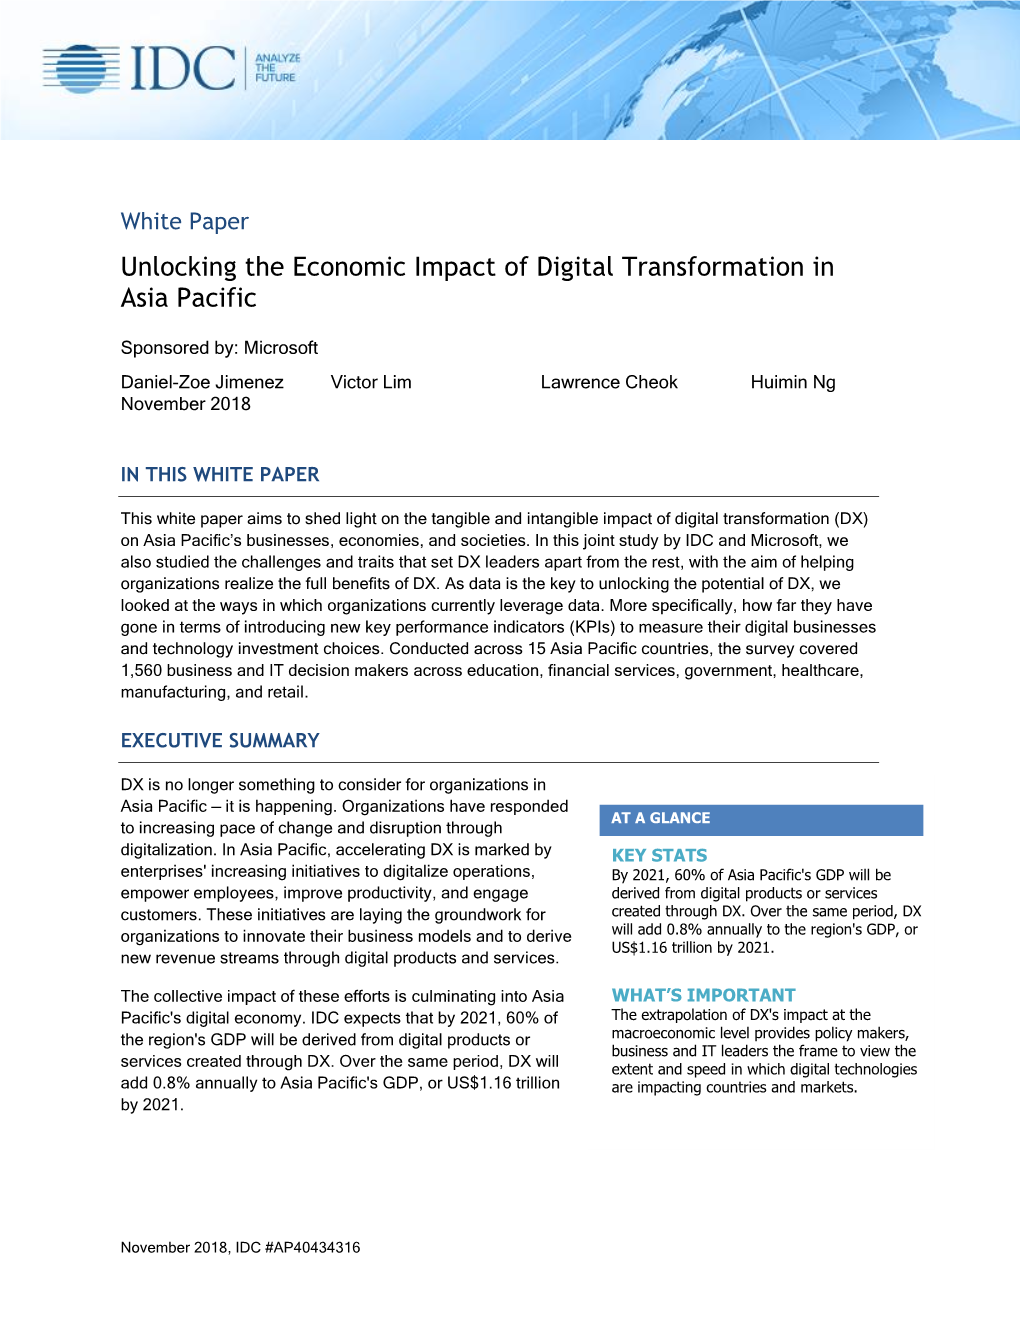 Unlocking the Economic Impact of Digital Transformation in Asia Pacific